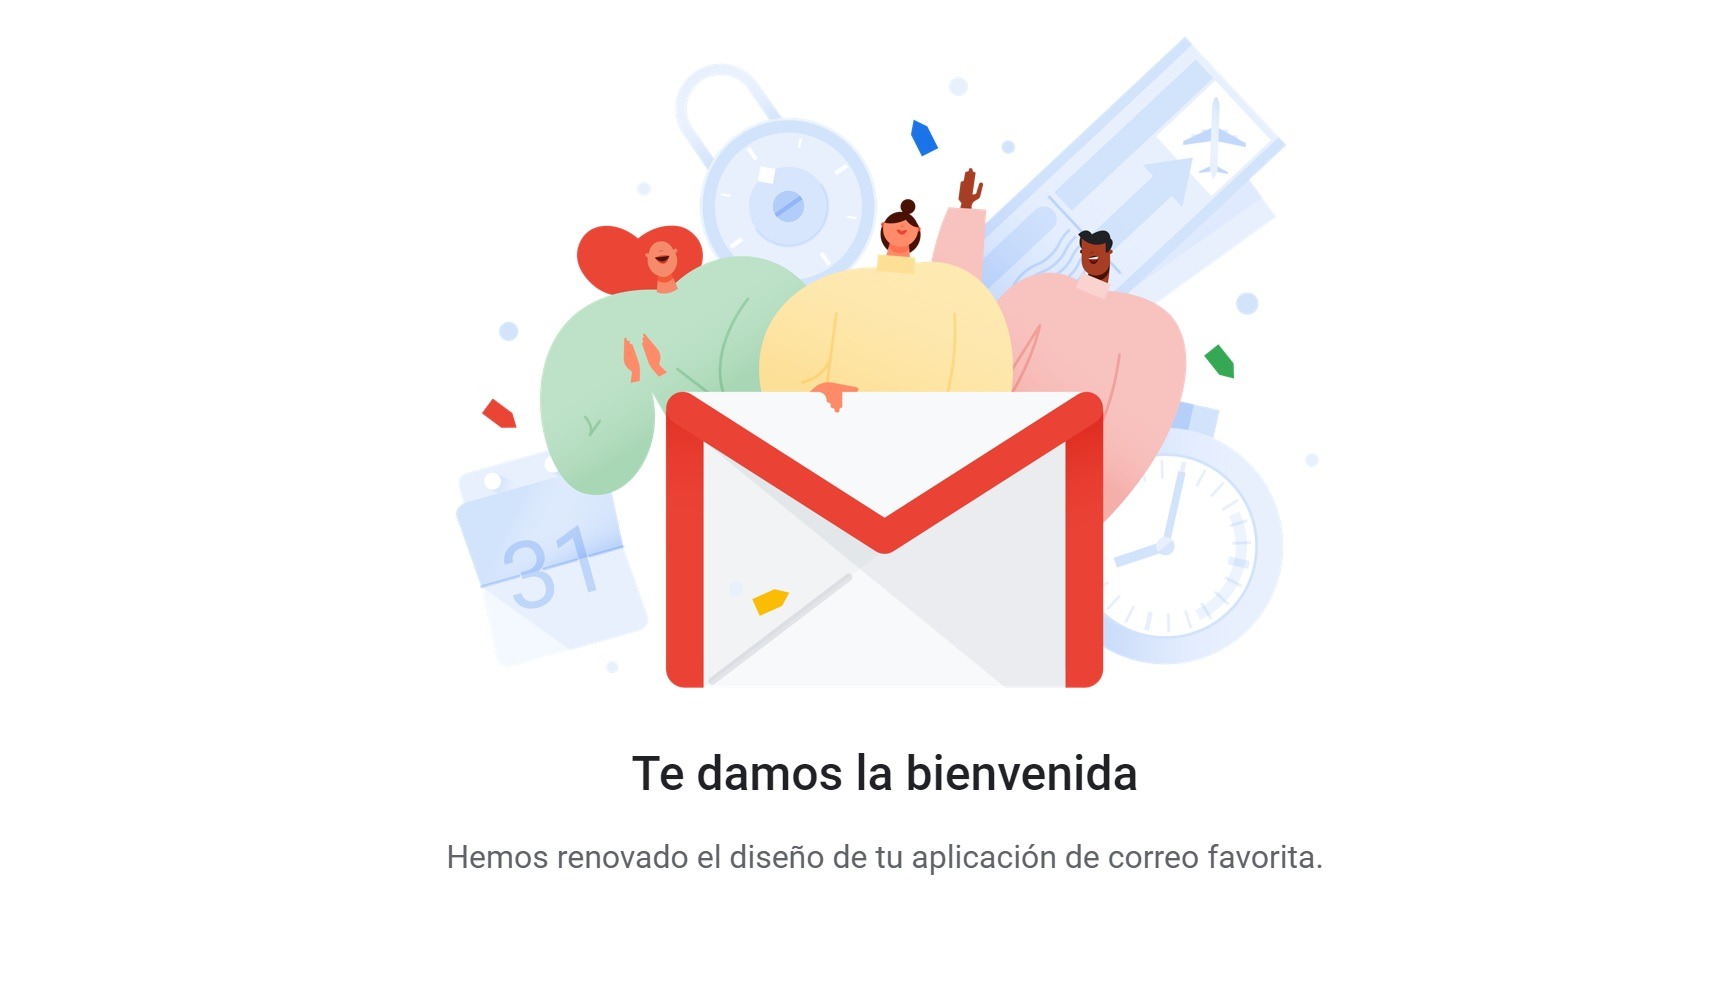 nuevo gmail service